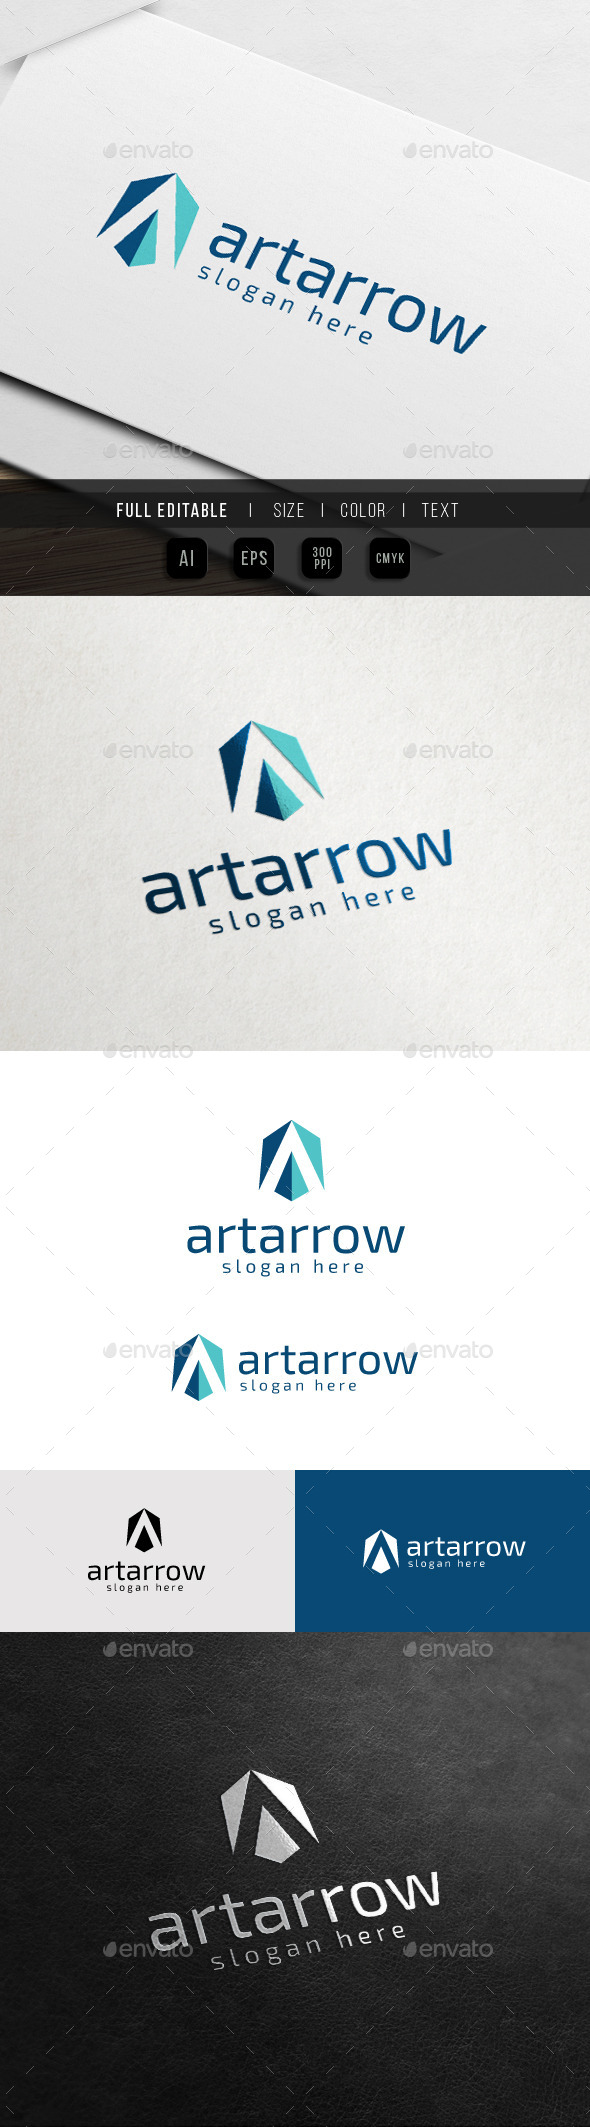 Application - Business Marketing - A Logo